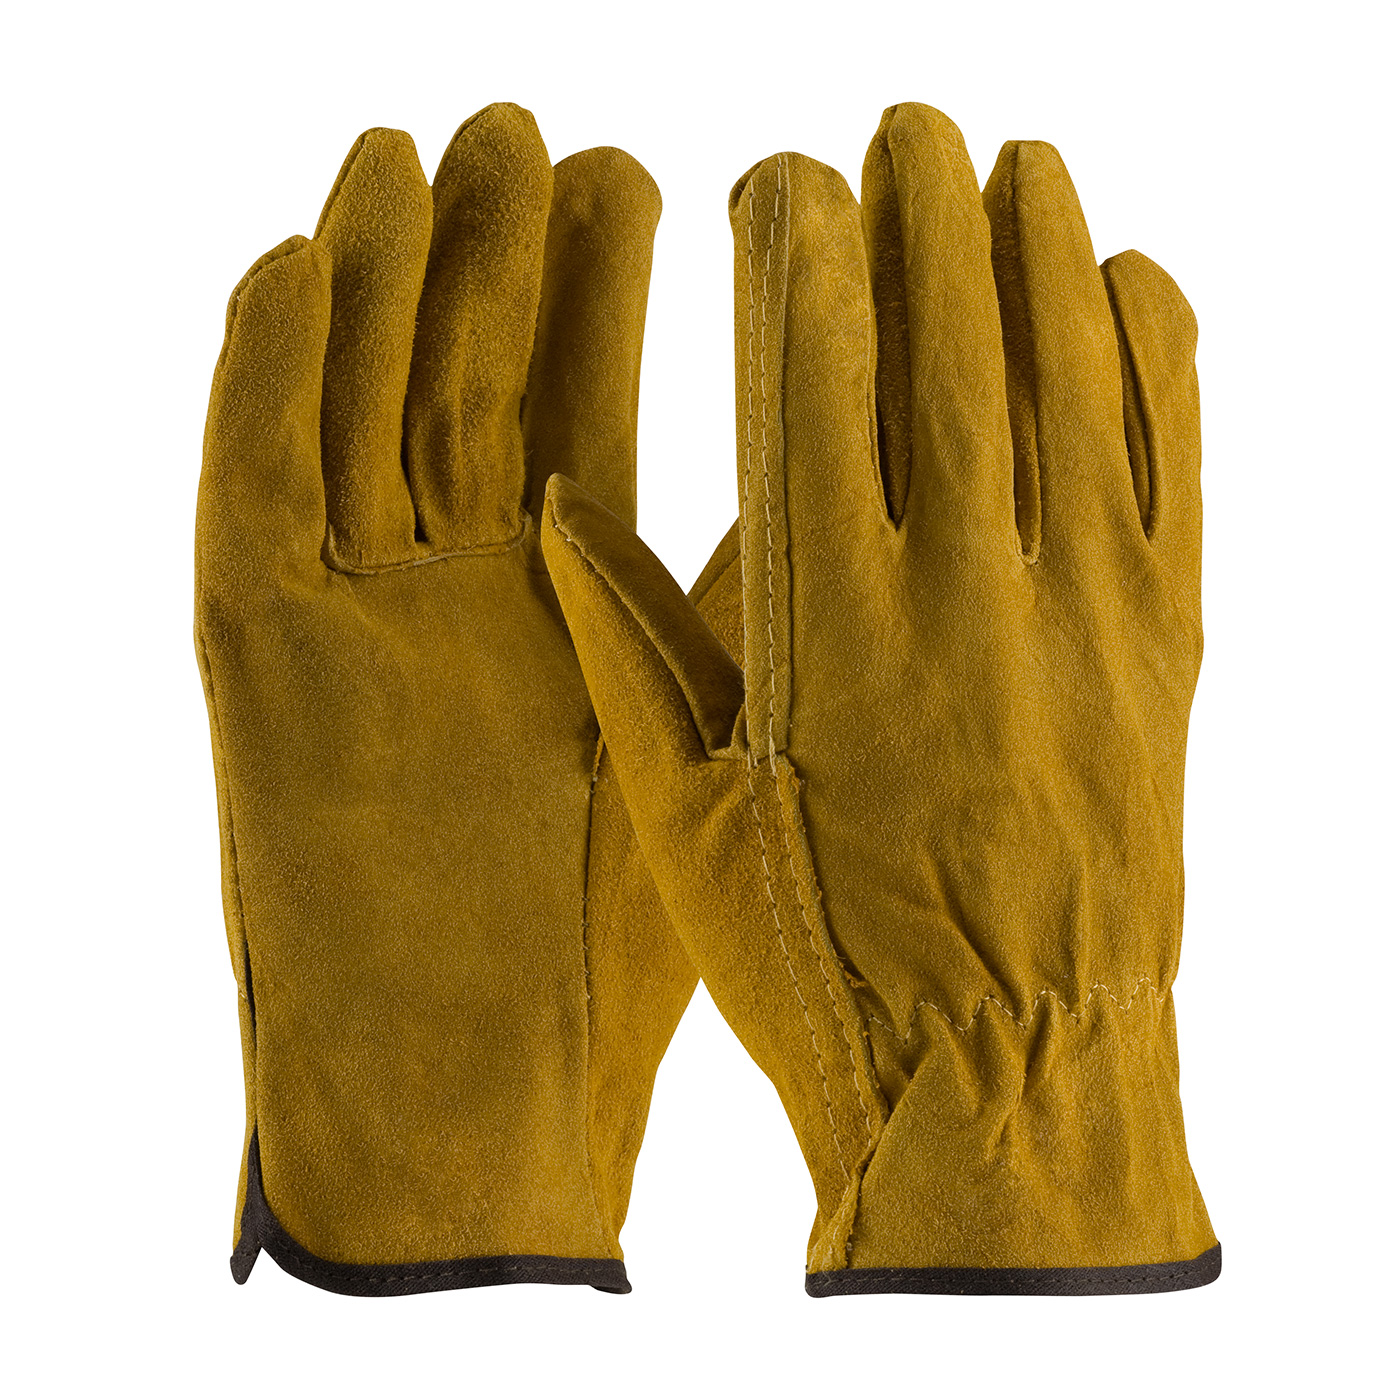 PIP 69-138/L Premium Grade Top Grain Cowhide Leather Drivers Glove - Keystone Thumb - Large PID-69 138 L